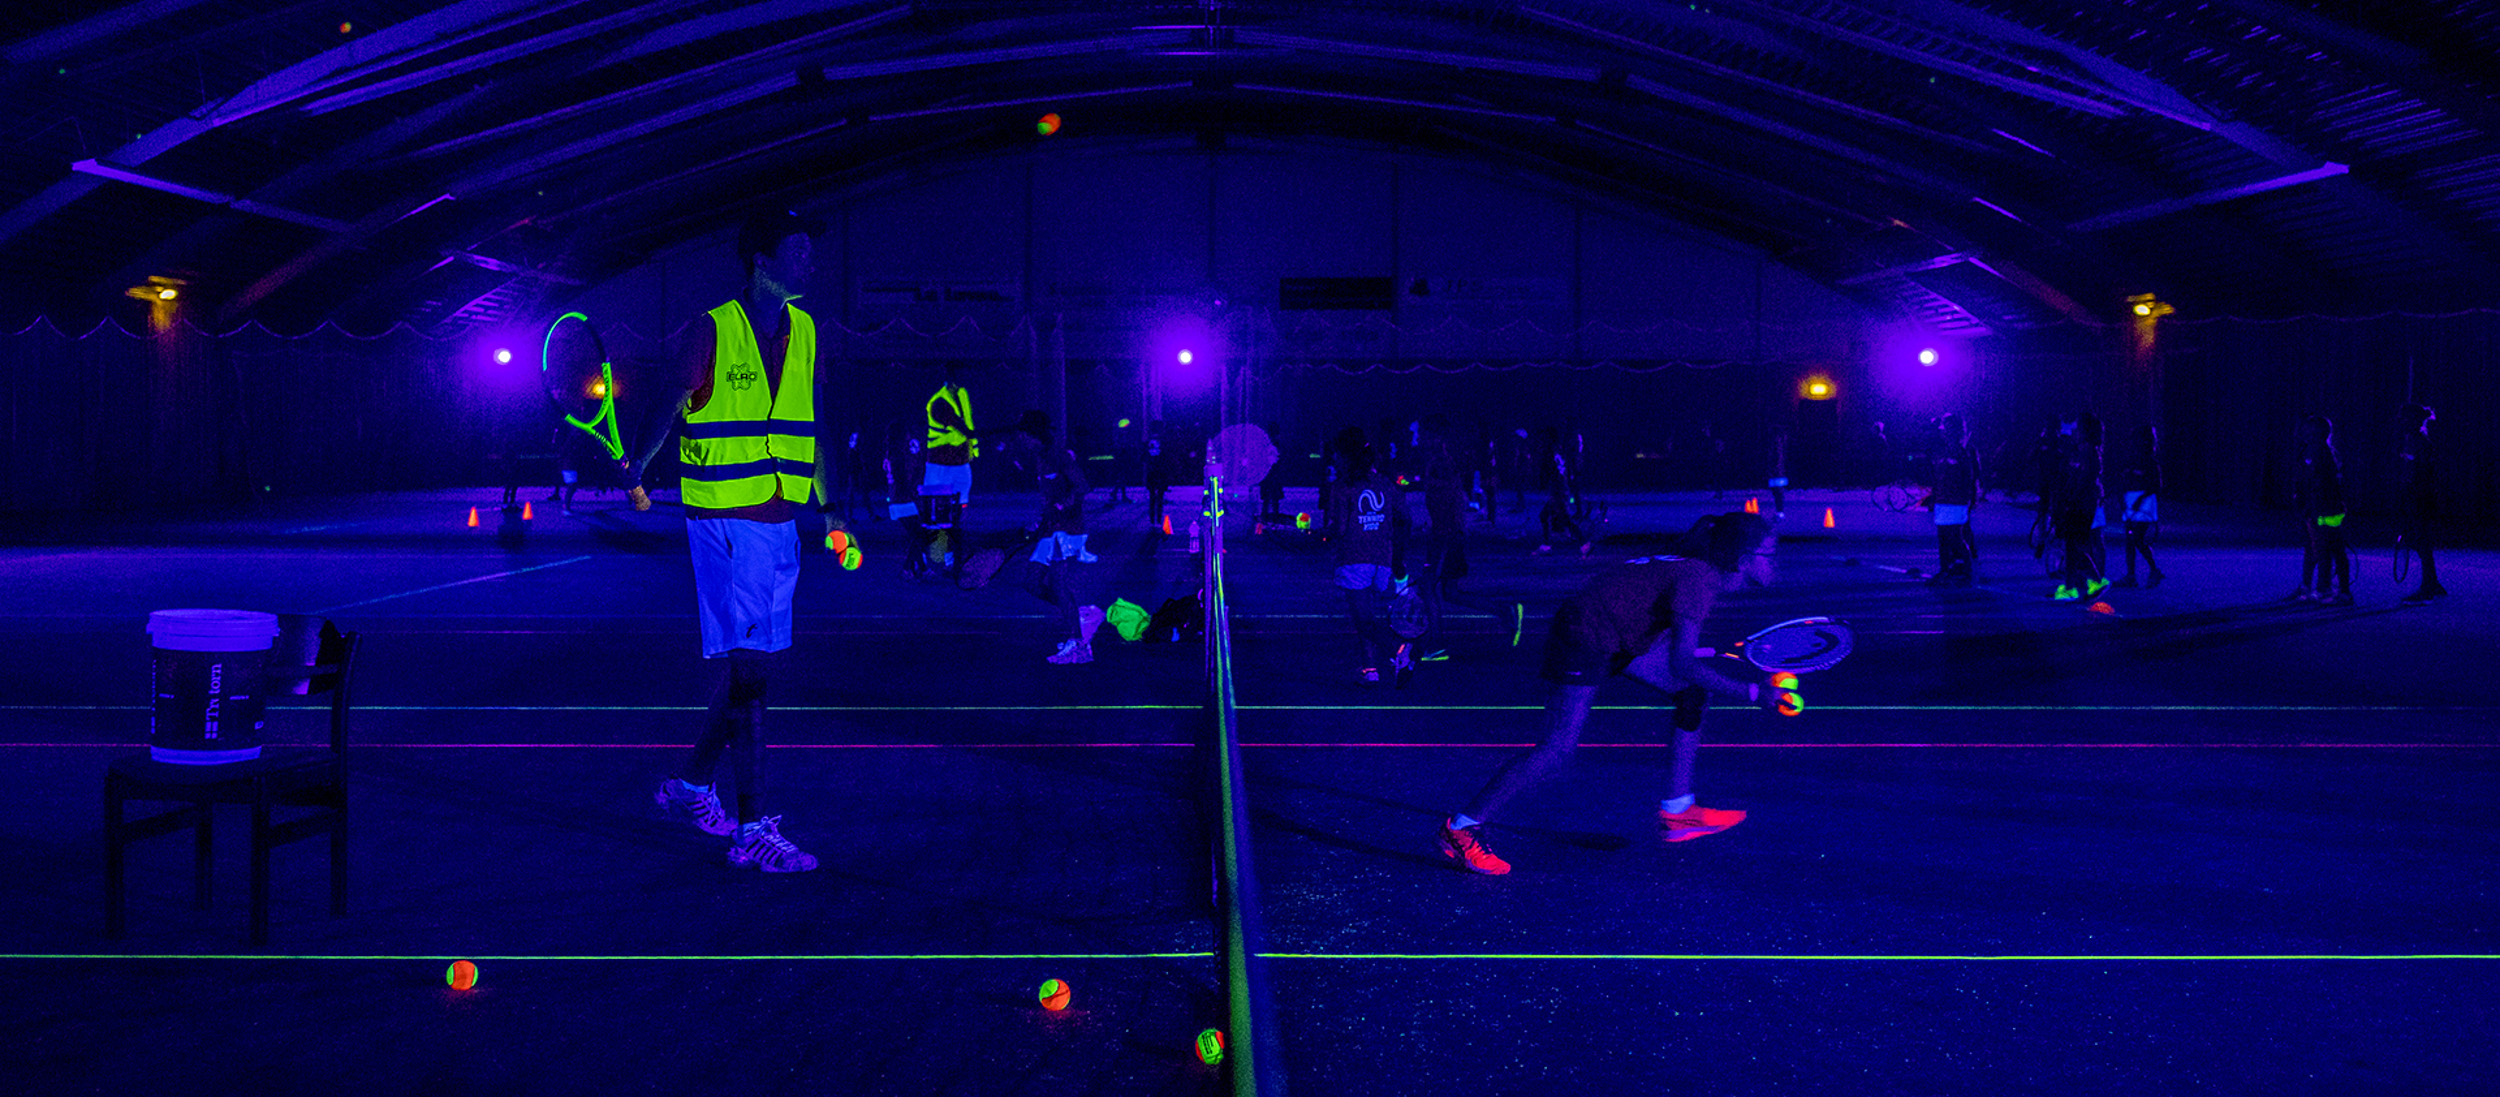 Glow in the dark tennis